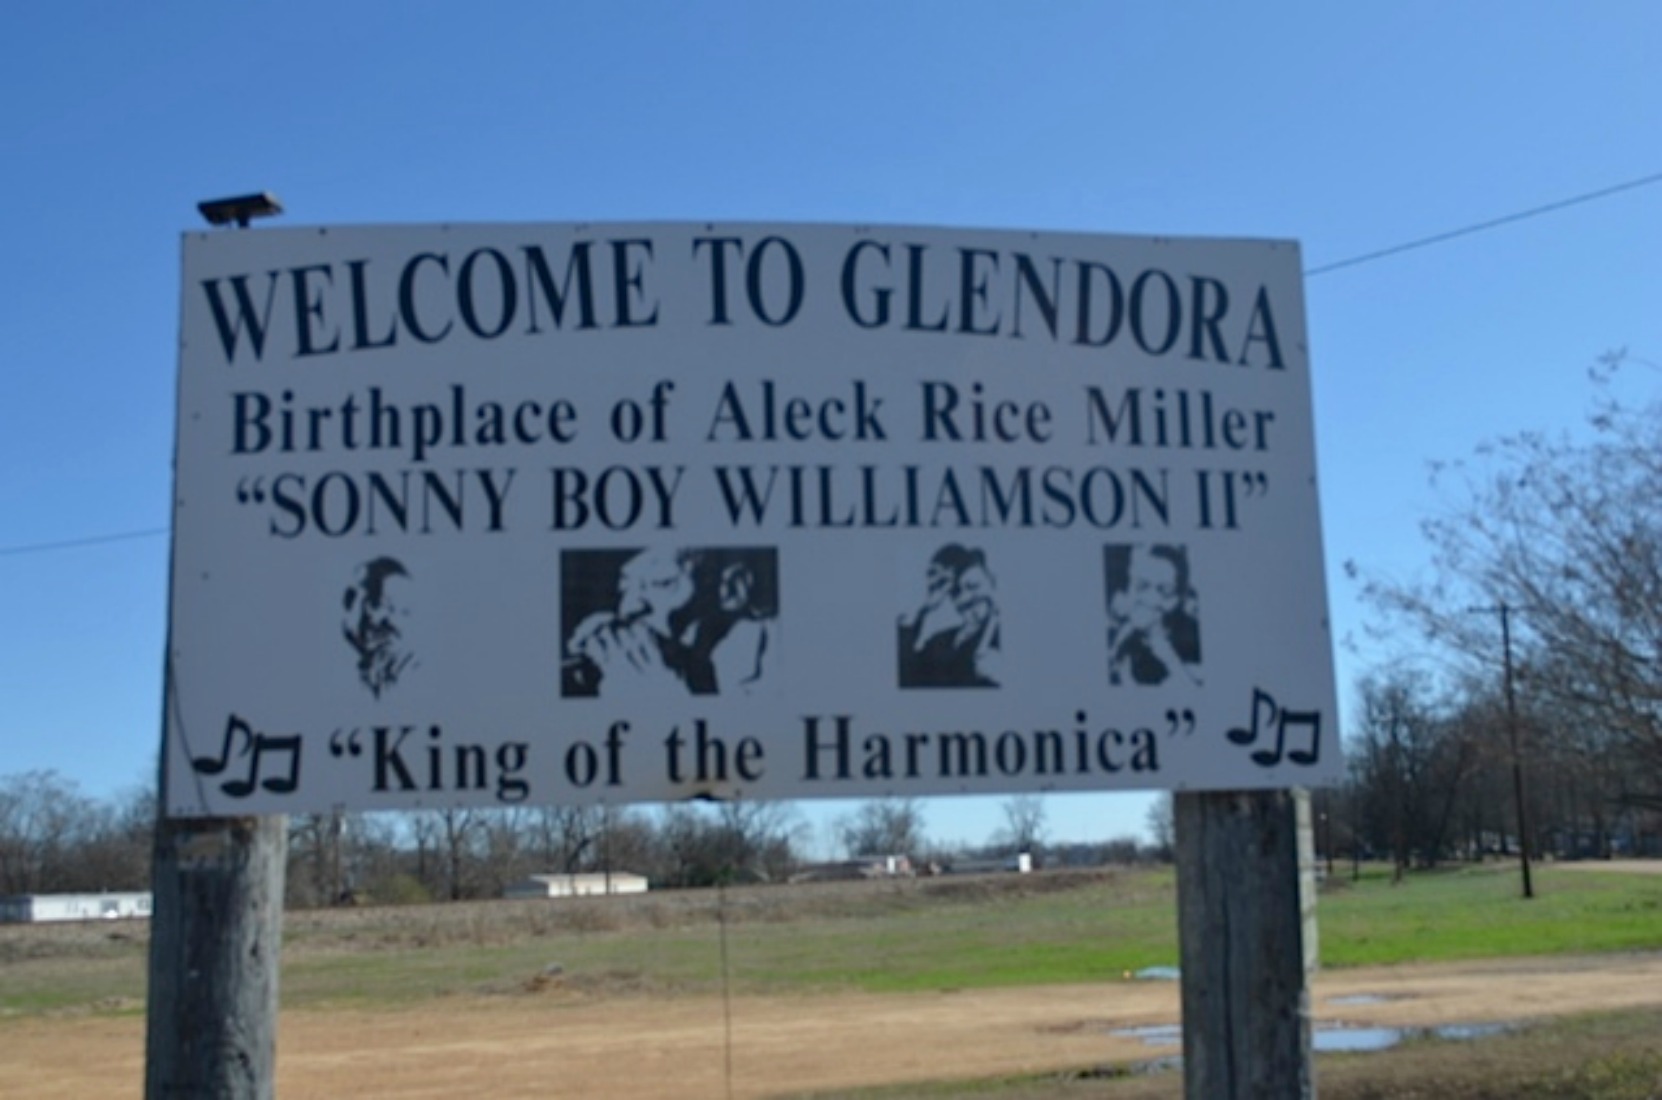 Sonny Boy Williamson Birthplace sign, Glendora, Mississippi (courtesy of Keith Petersen)